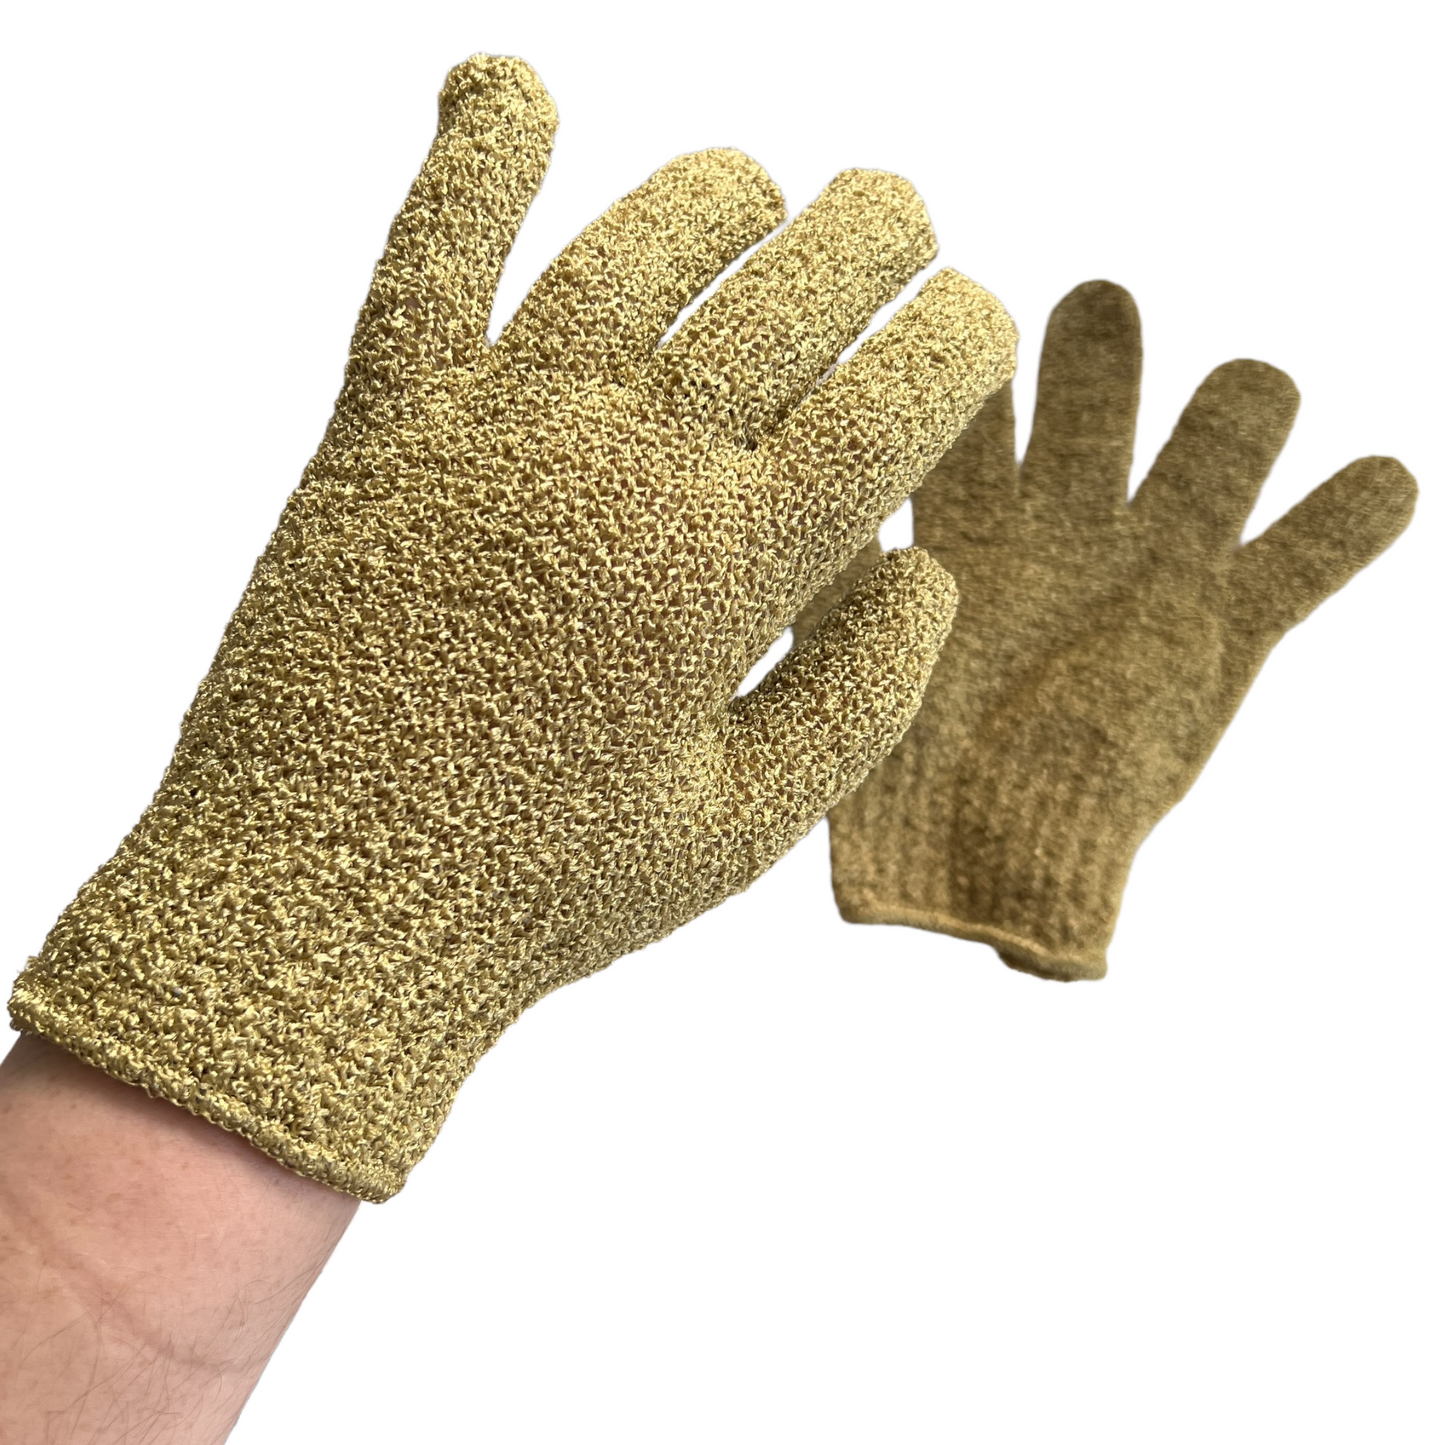 Quick Potato Peeling Gloves  SPIRIT SPARKPLUGS   